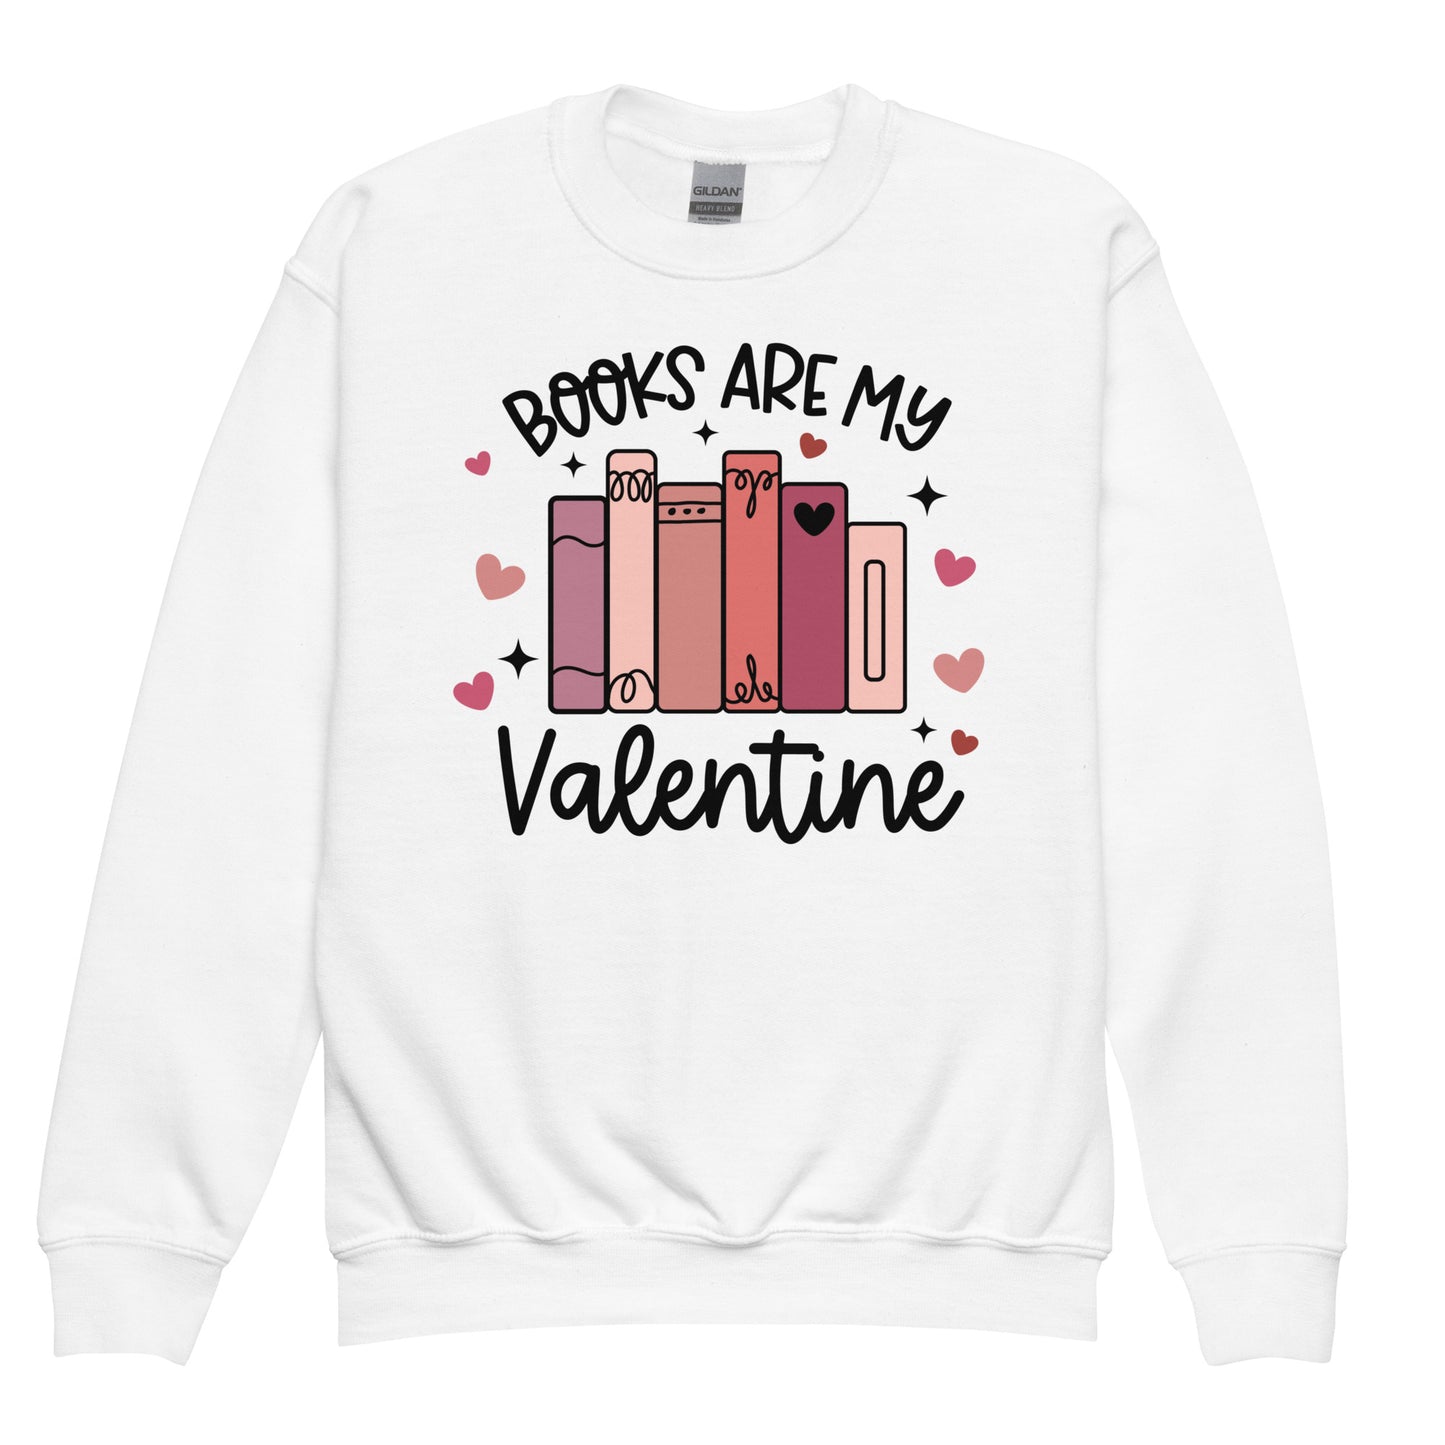 Books are my Valentine Sweatshirt